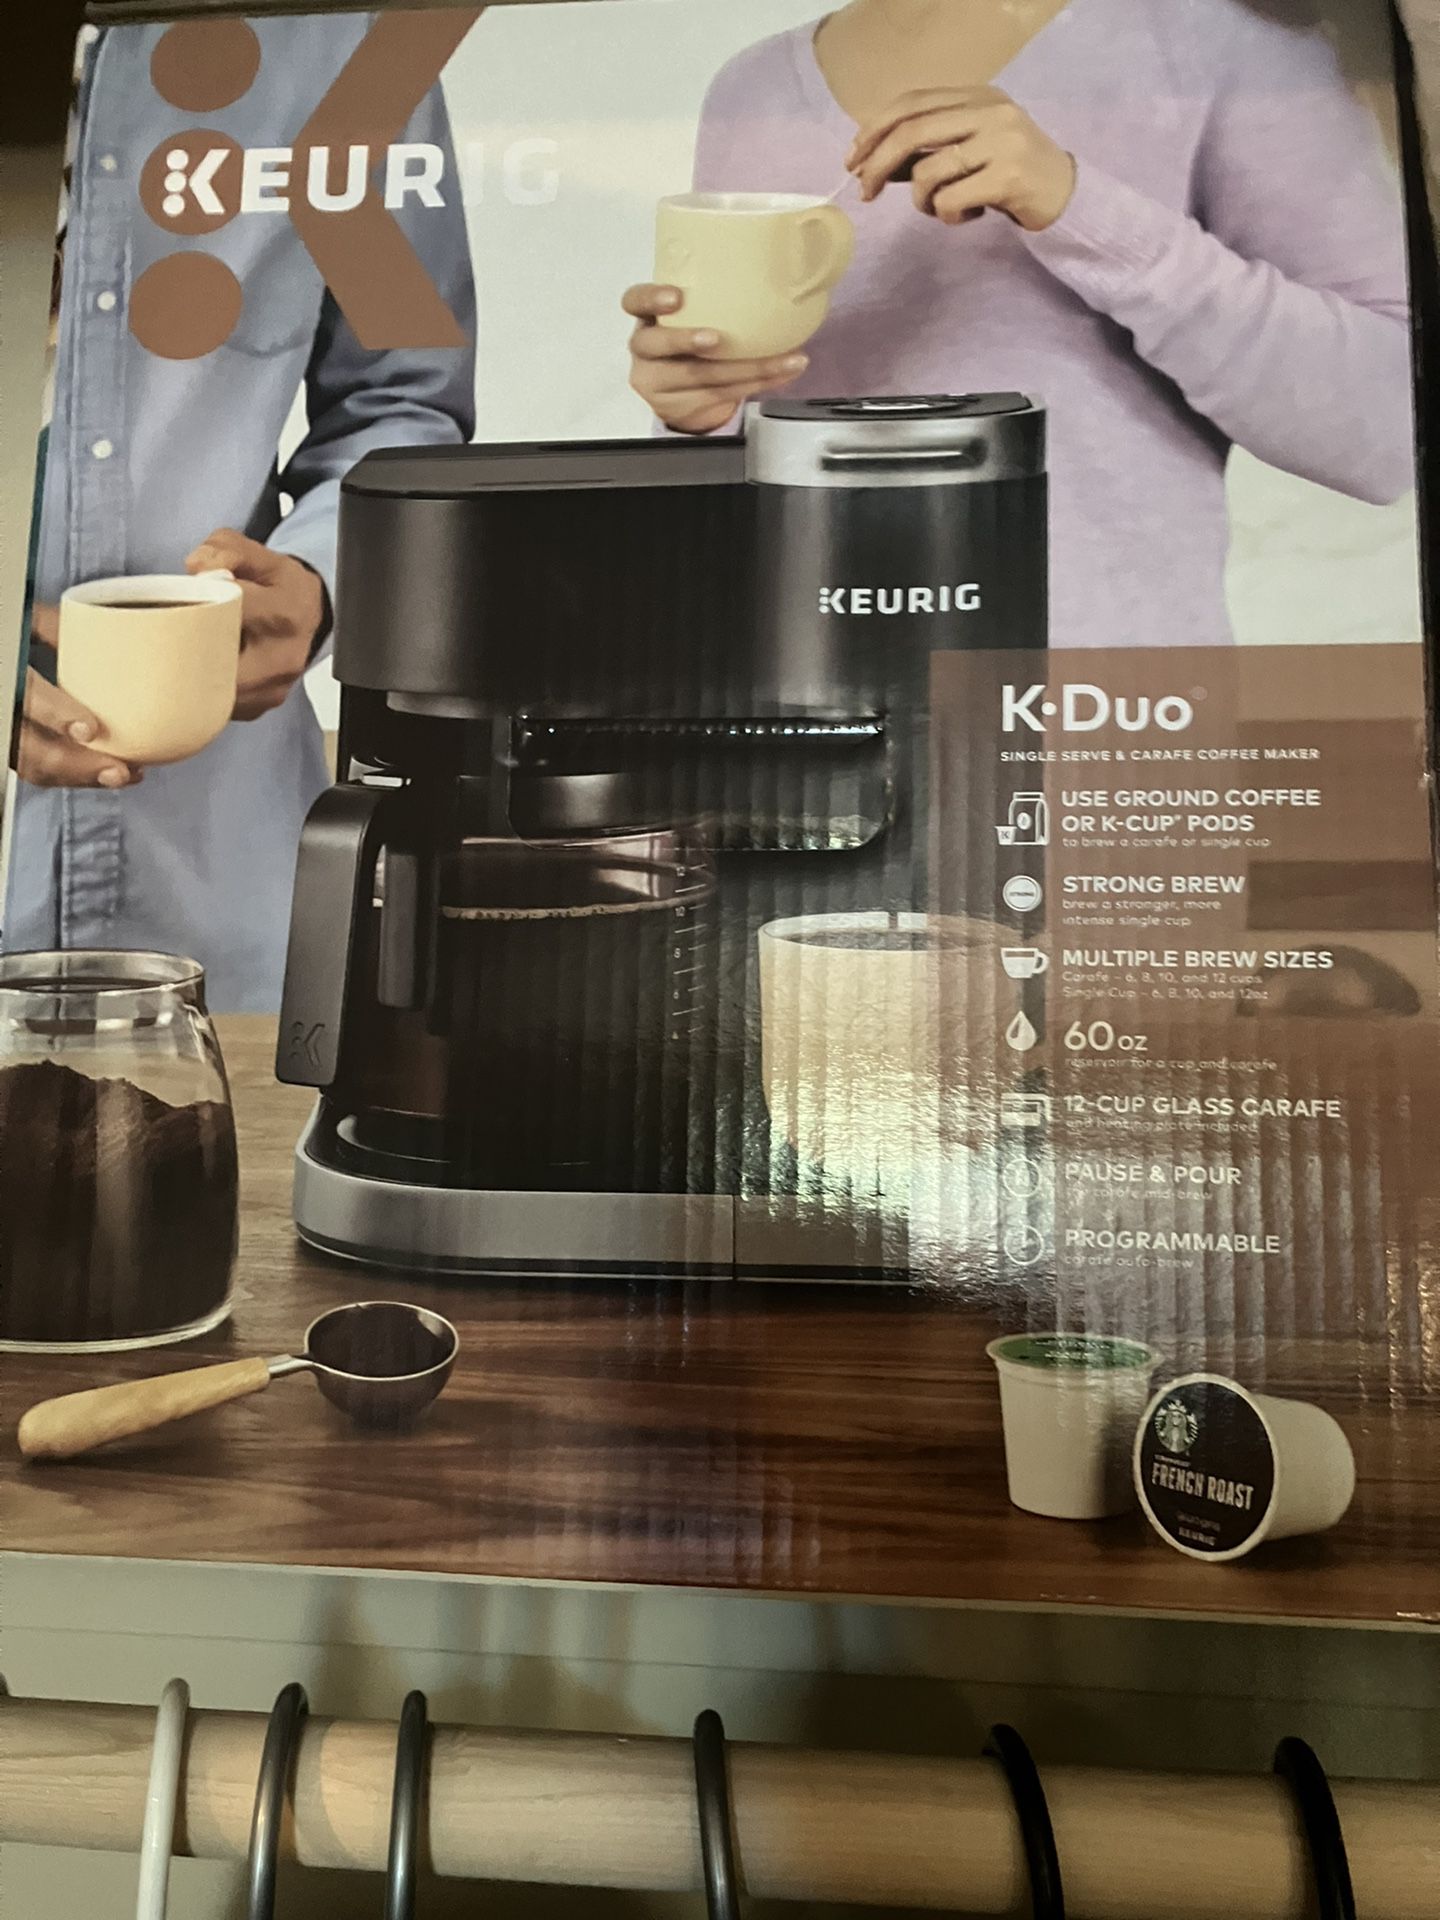 Keurig K-Duo Single Serve K Pod And carafe Coffee Maker.